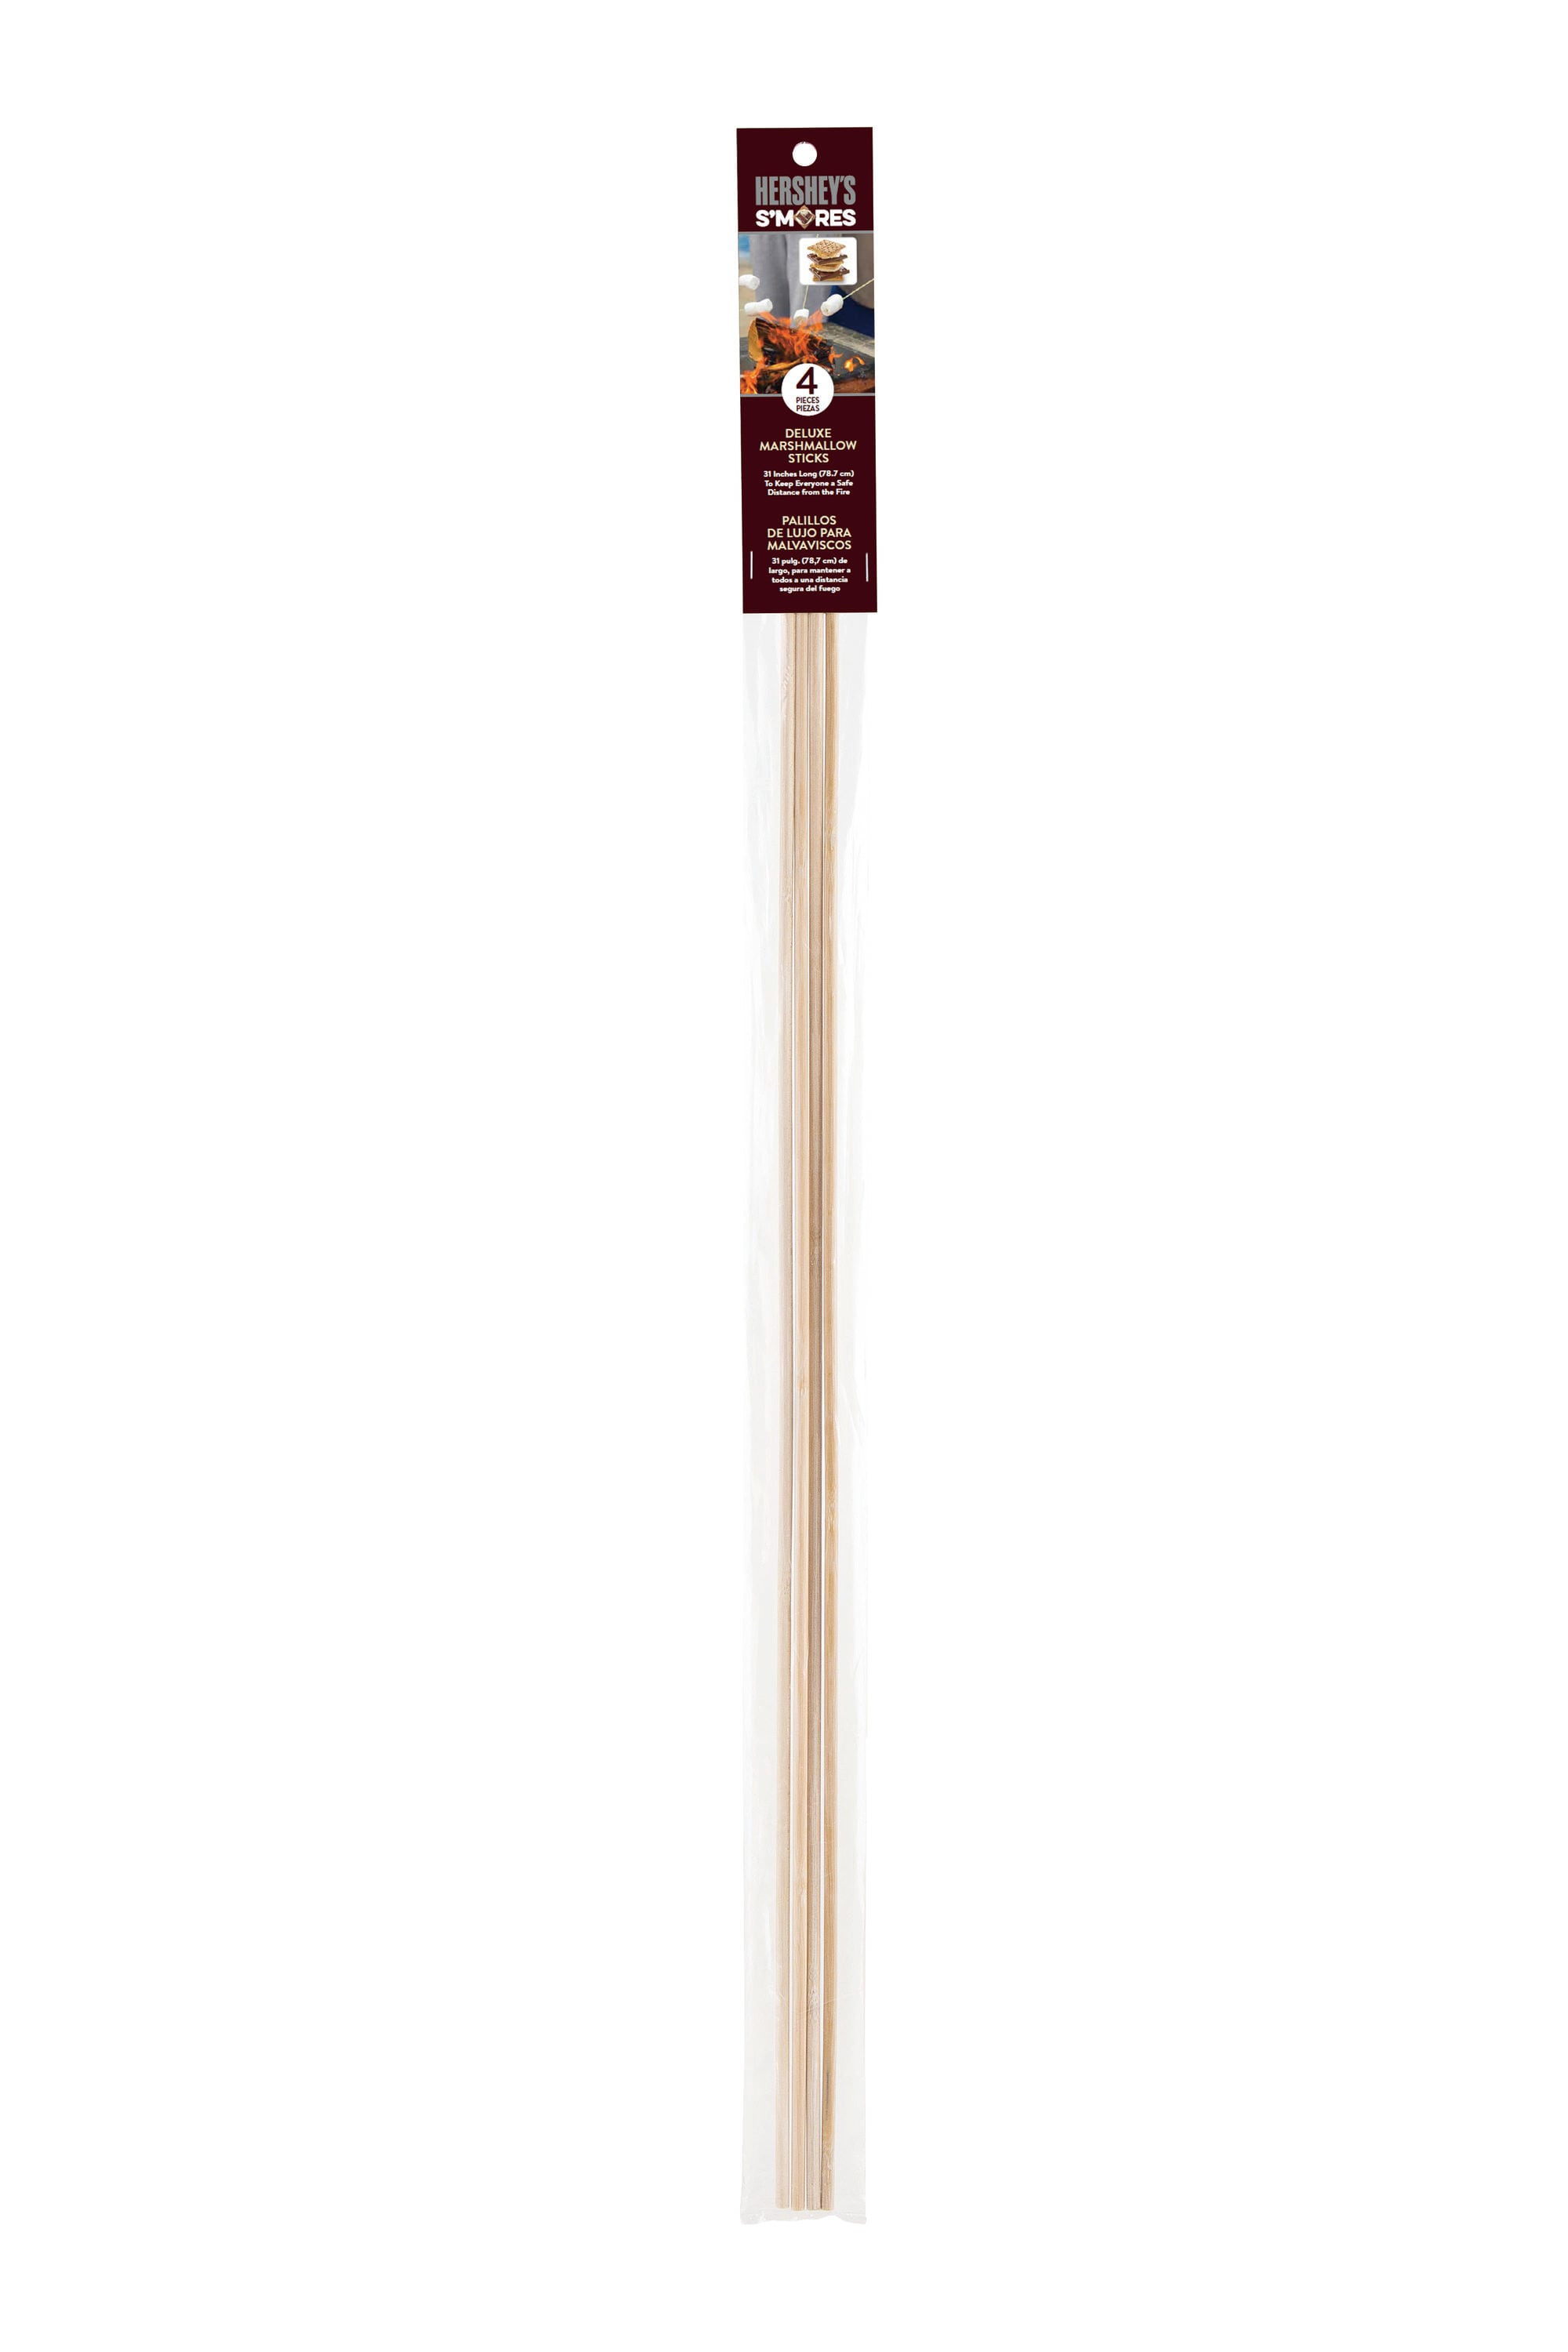 Chrome Hearts Marshmallow Skewer BBQ Stick